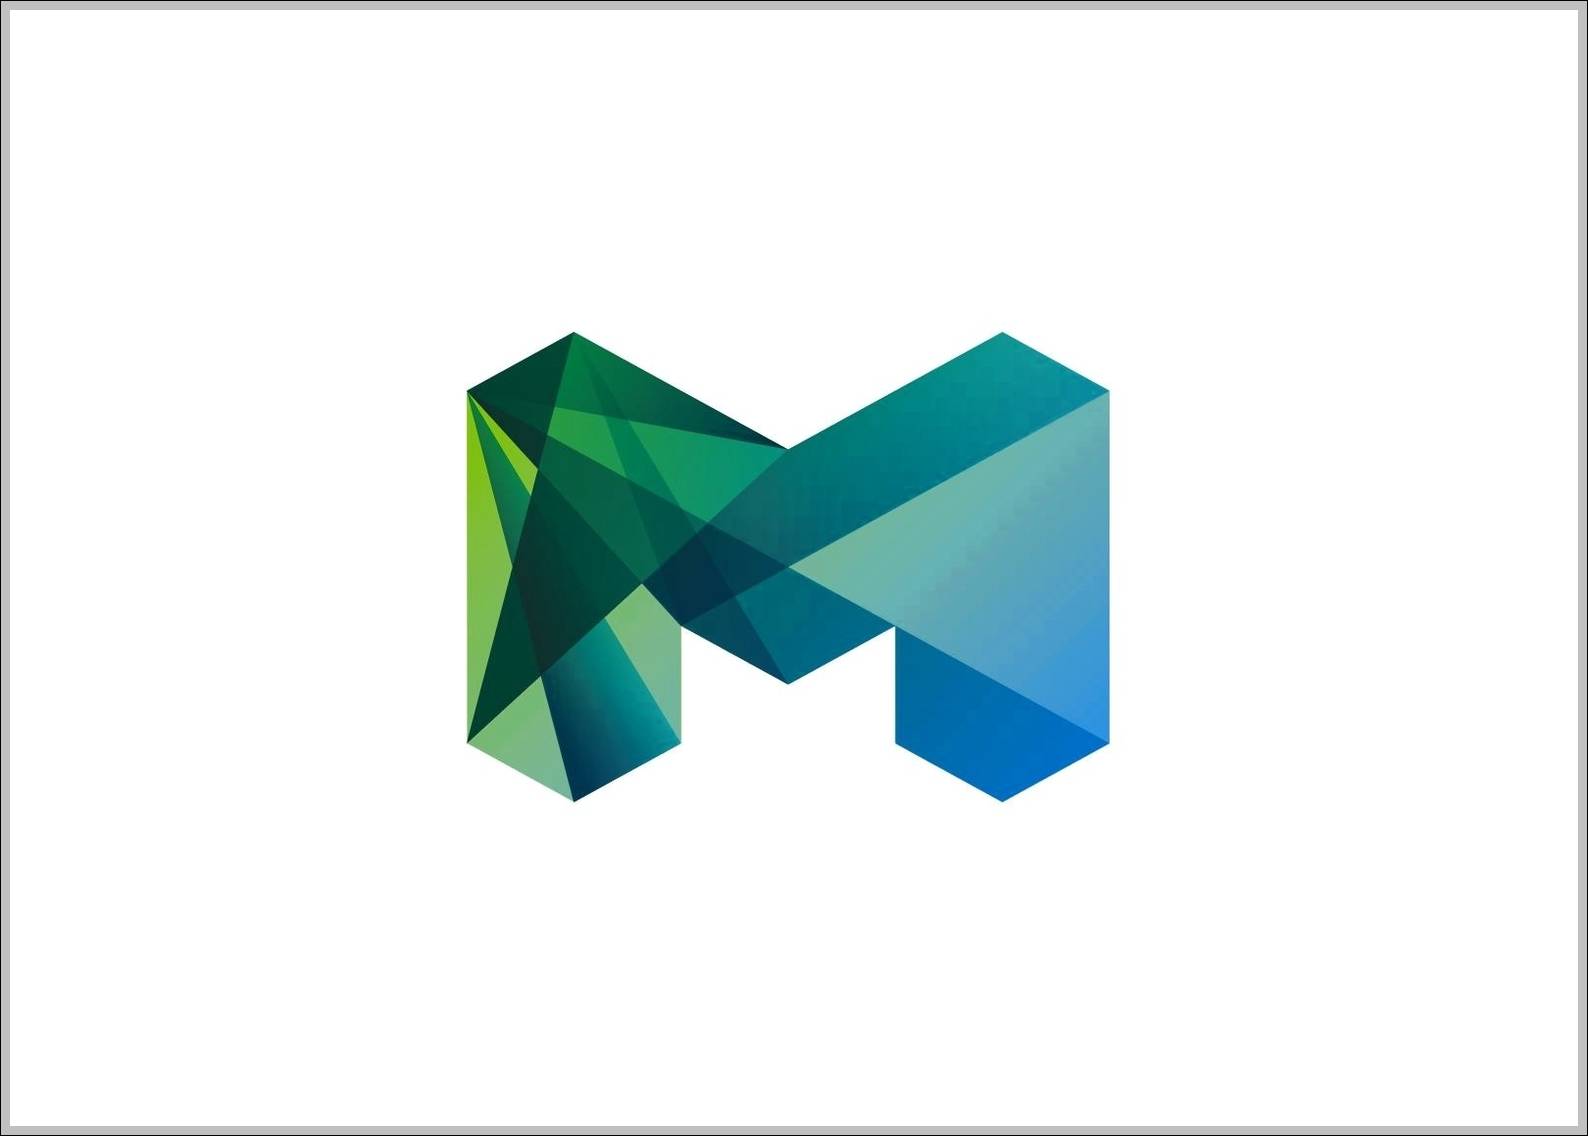 City of Melbourne logo M